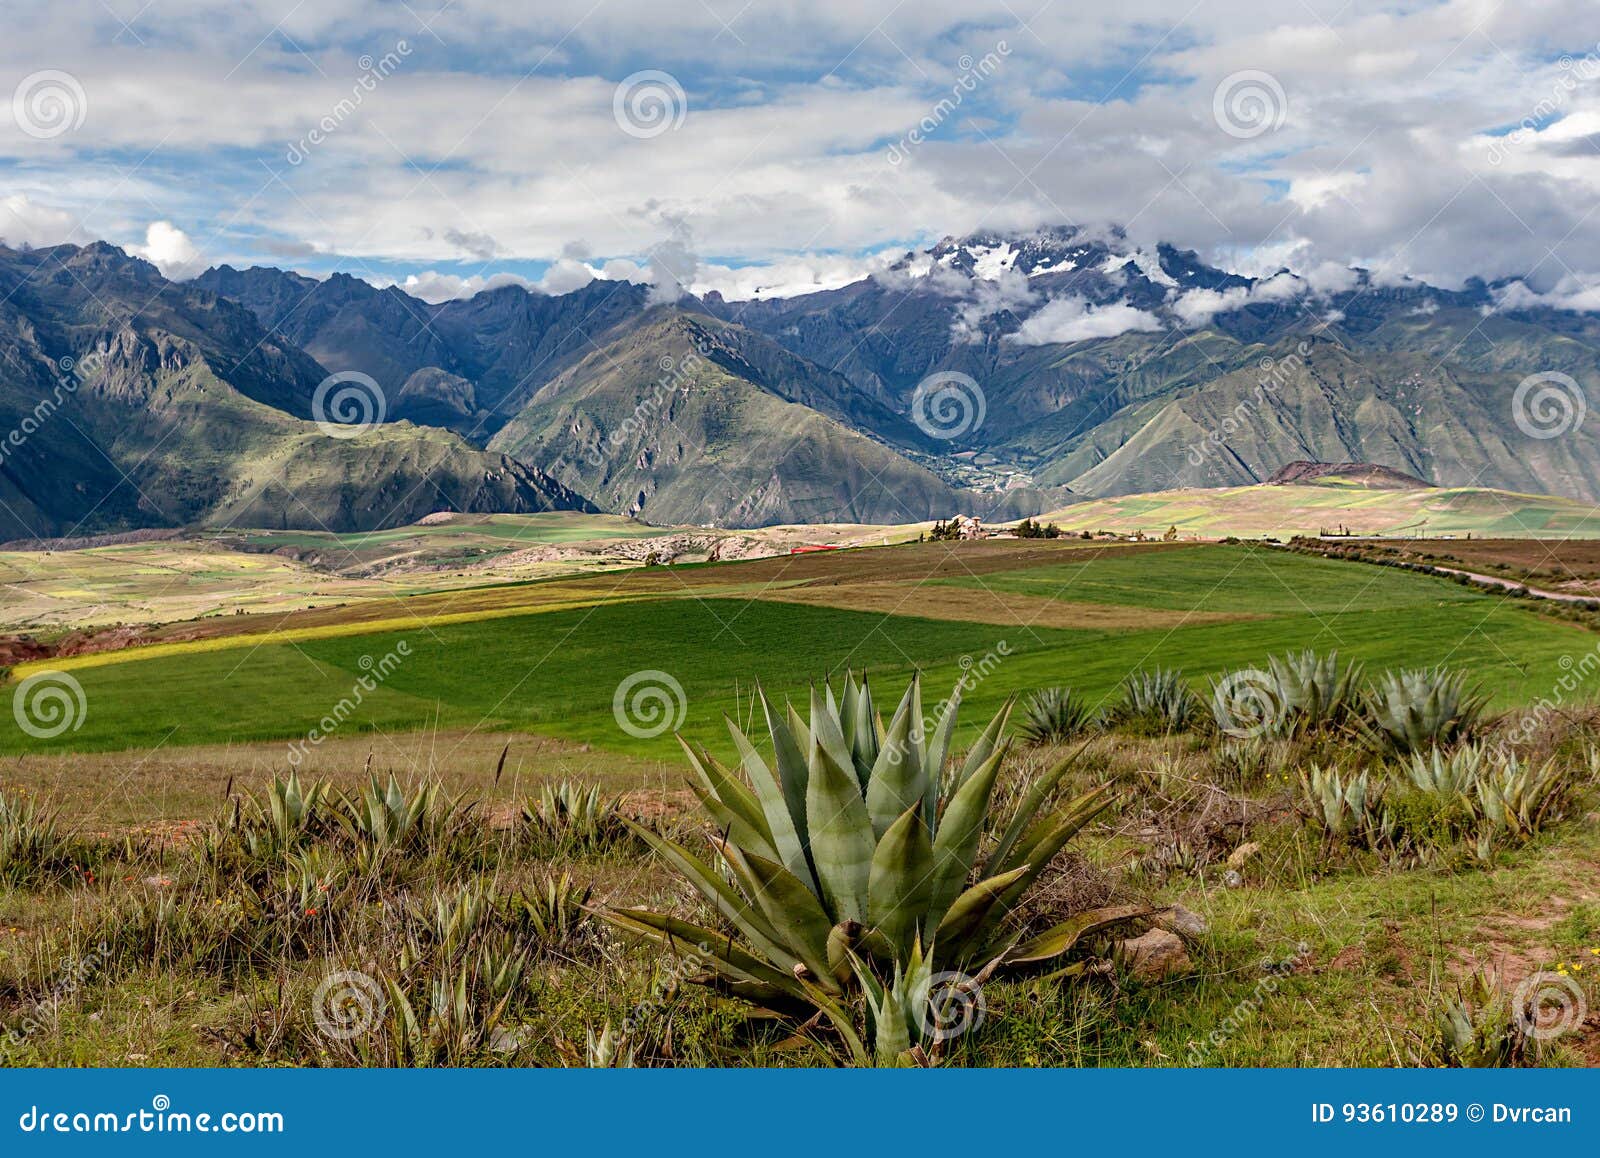 sacred valley. cusco region, urubamba province, peru